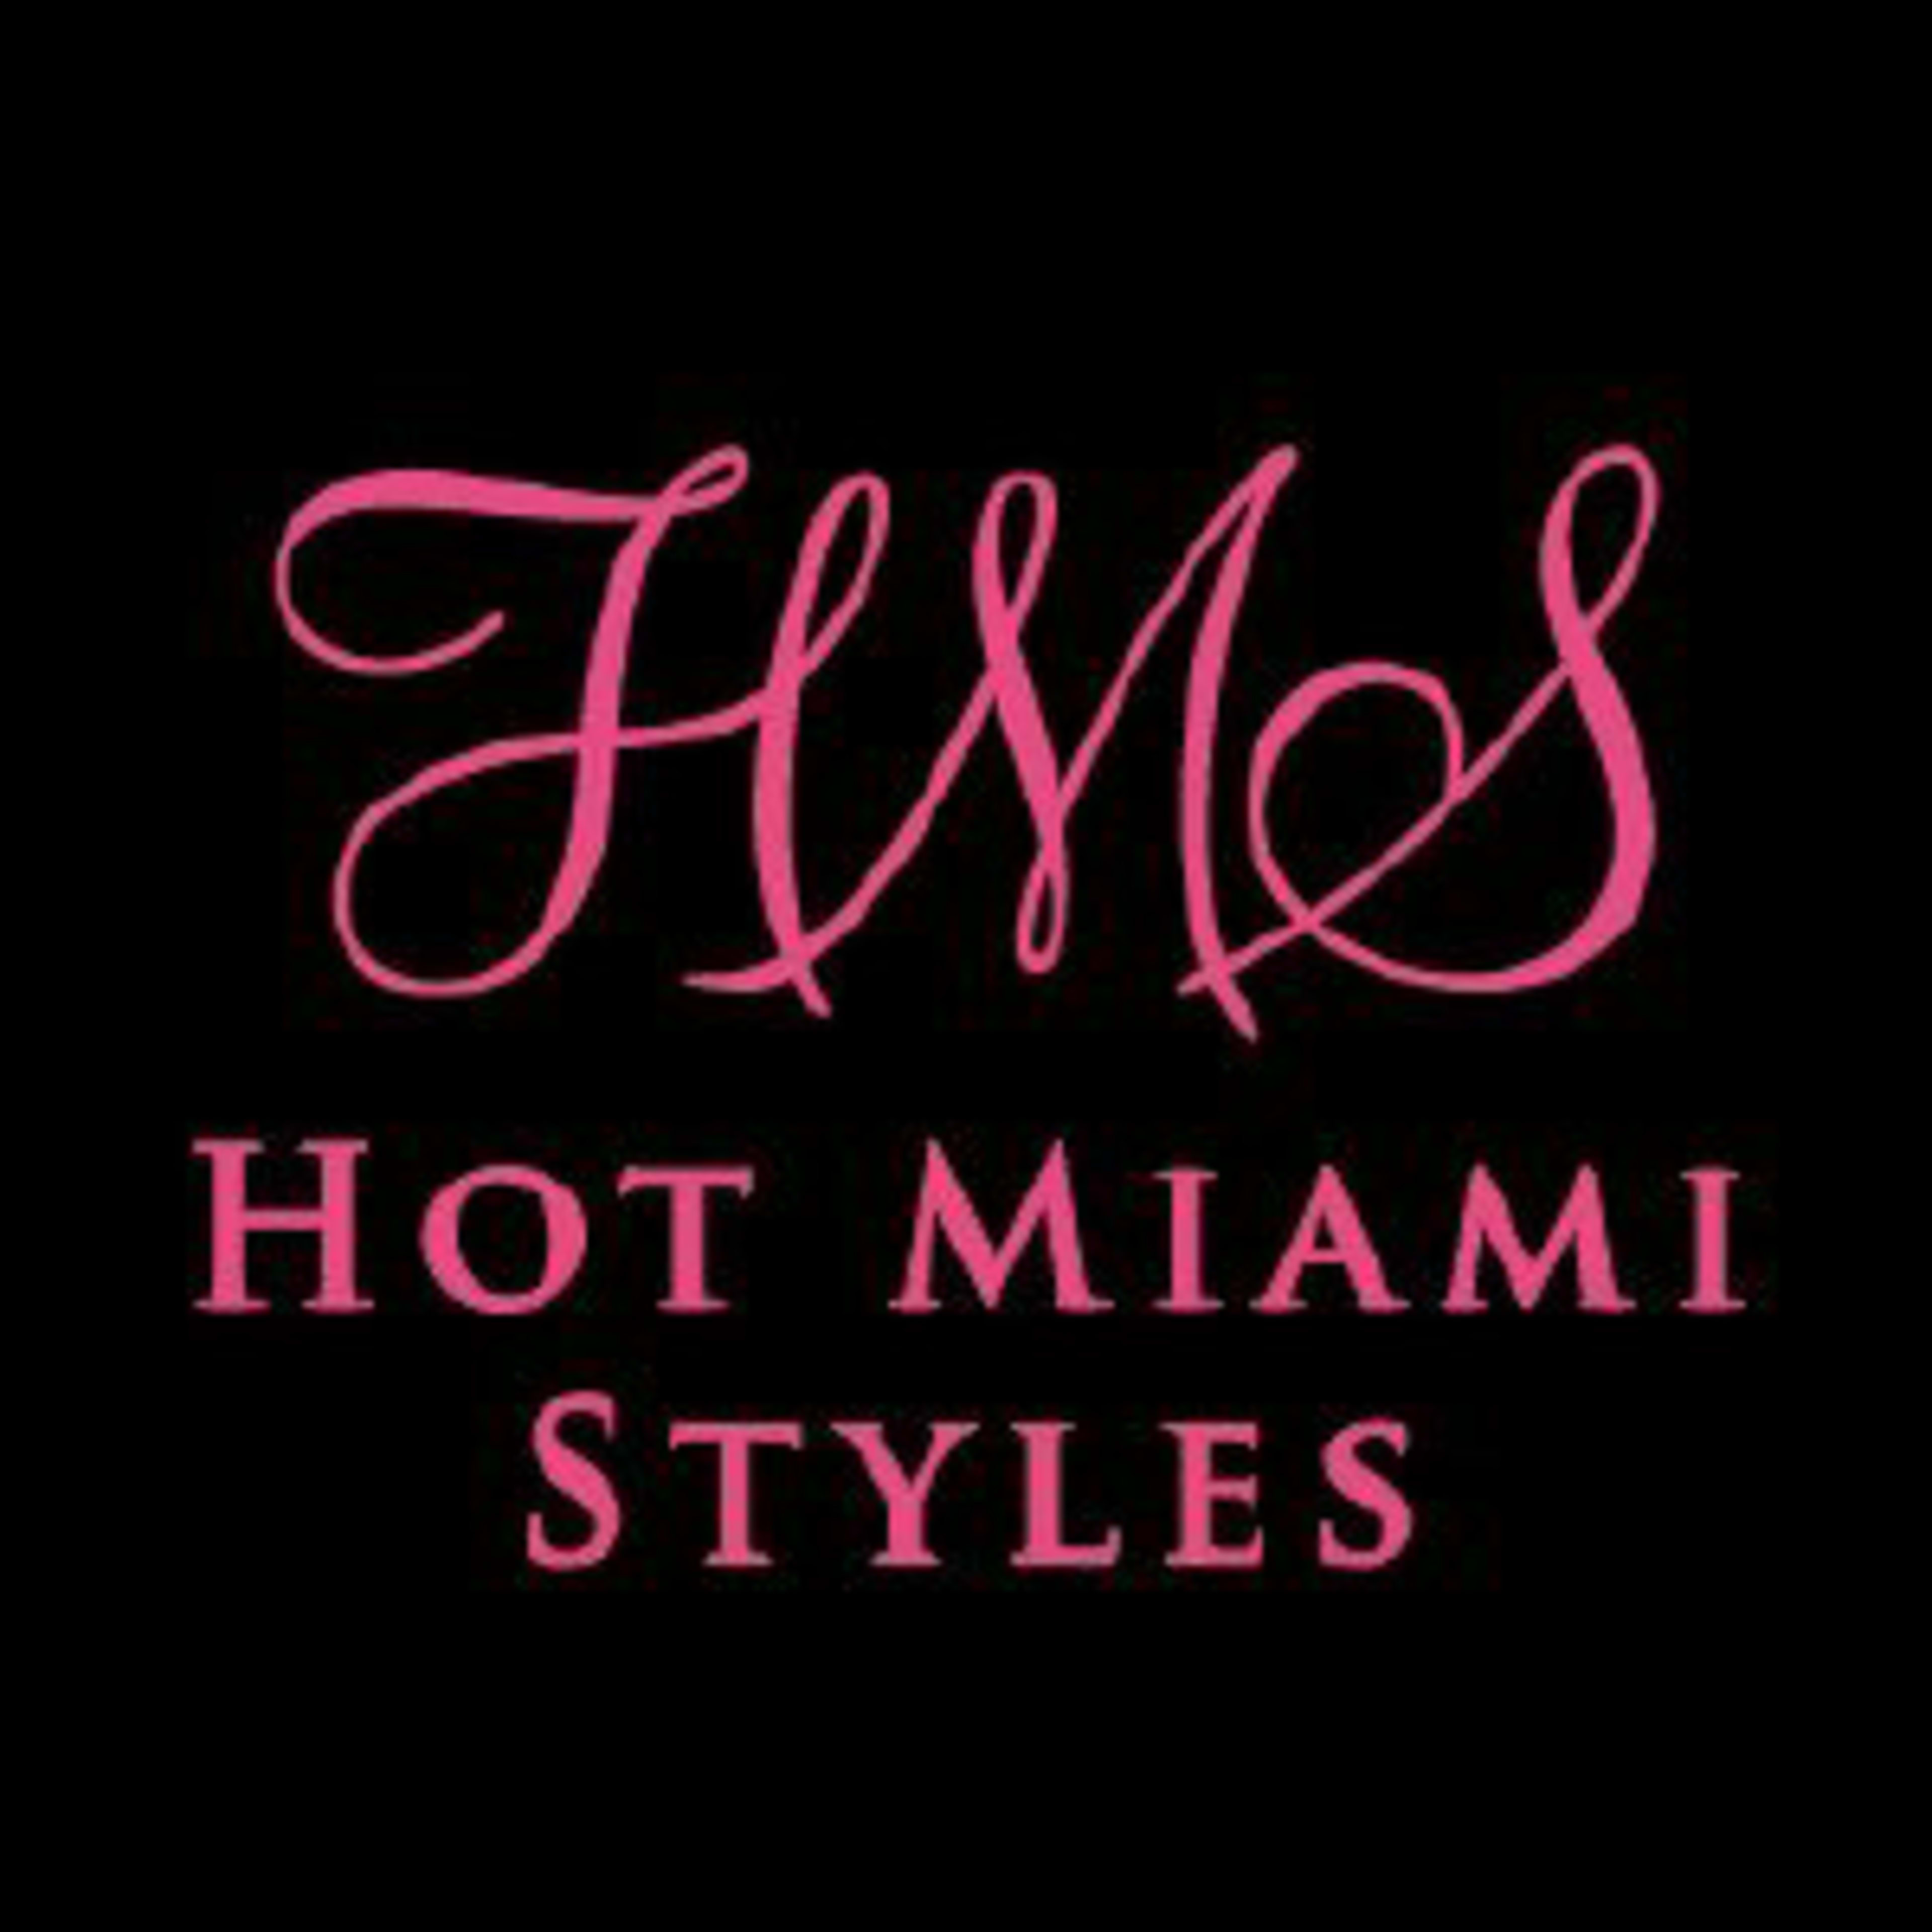 Hot Miami Styles Code